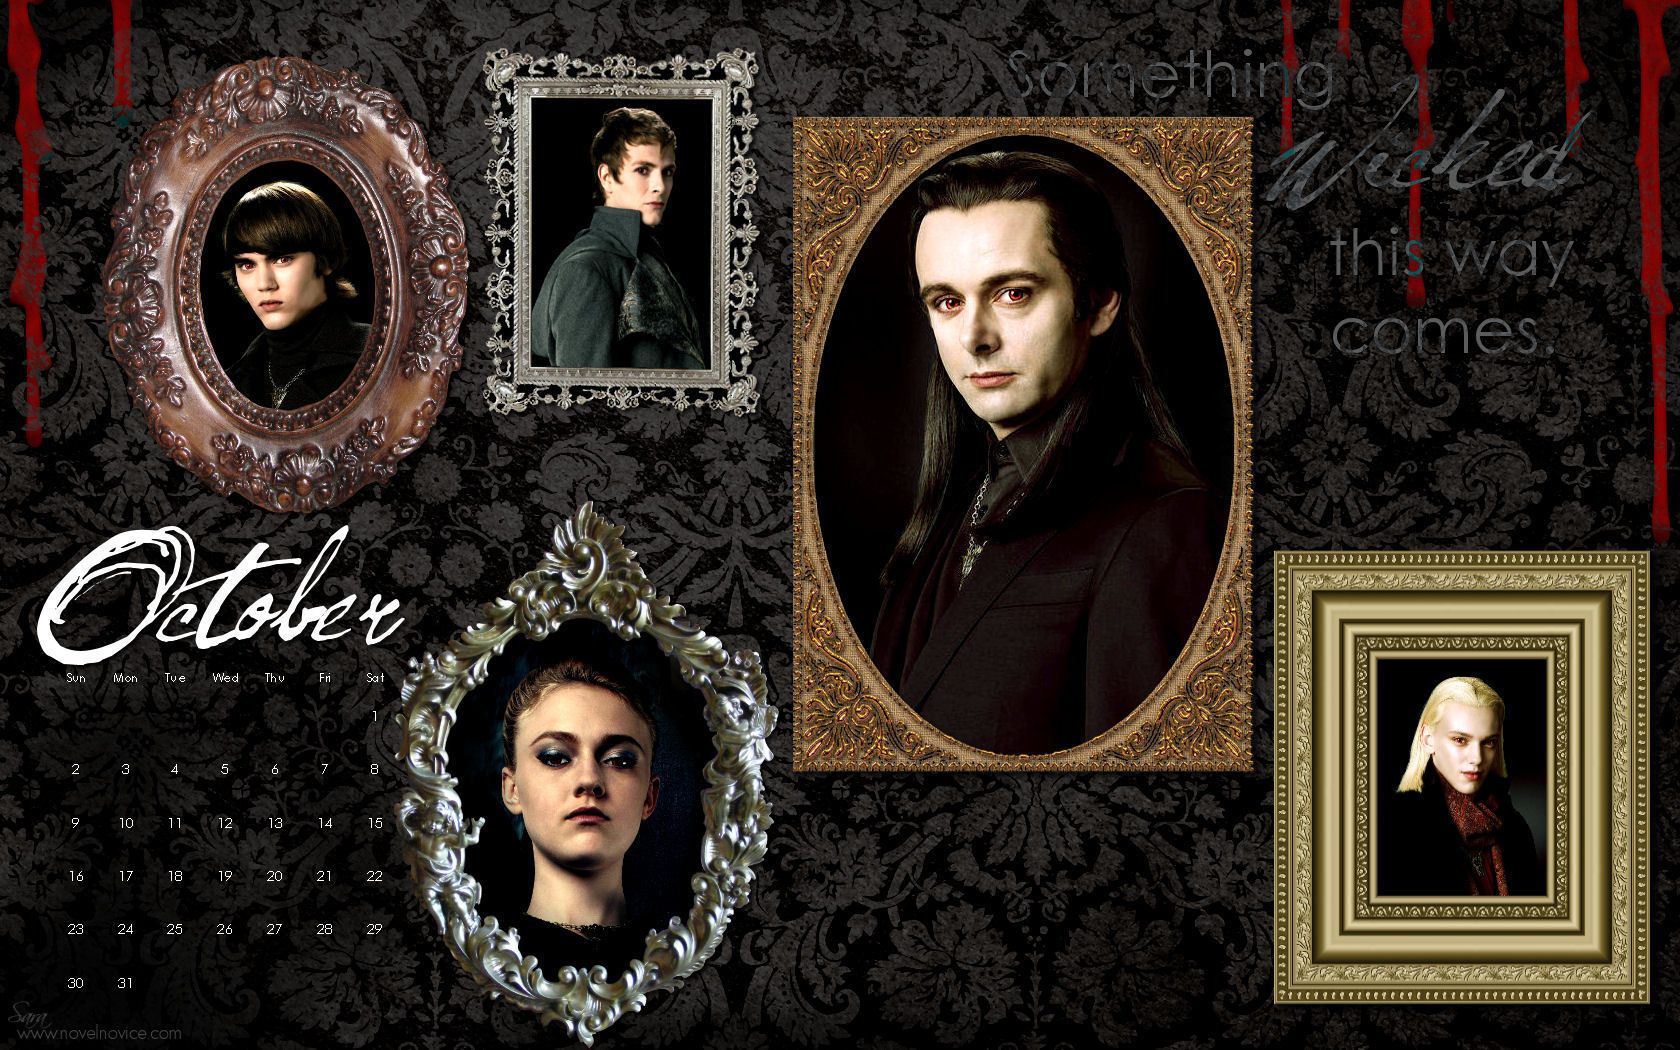 The Twilight Saga 2011 Desktop Wallpaper Calendars - Twilight